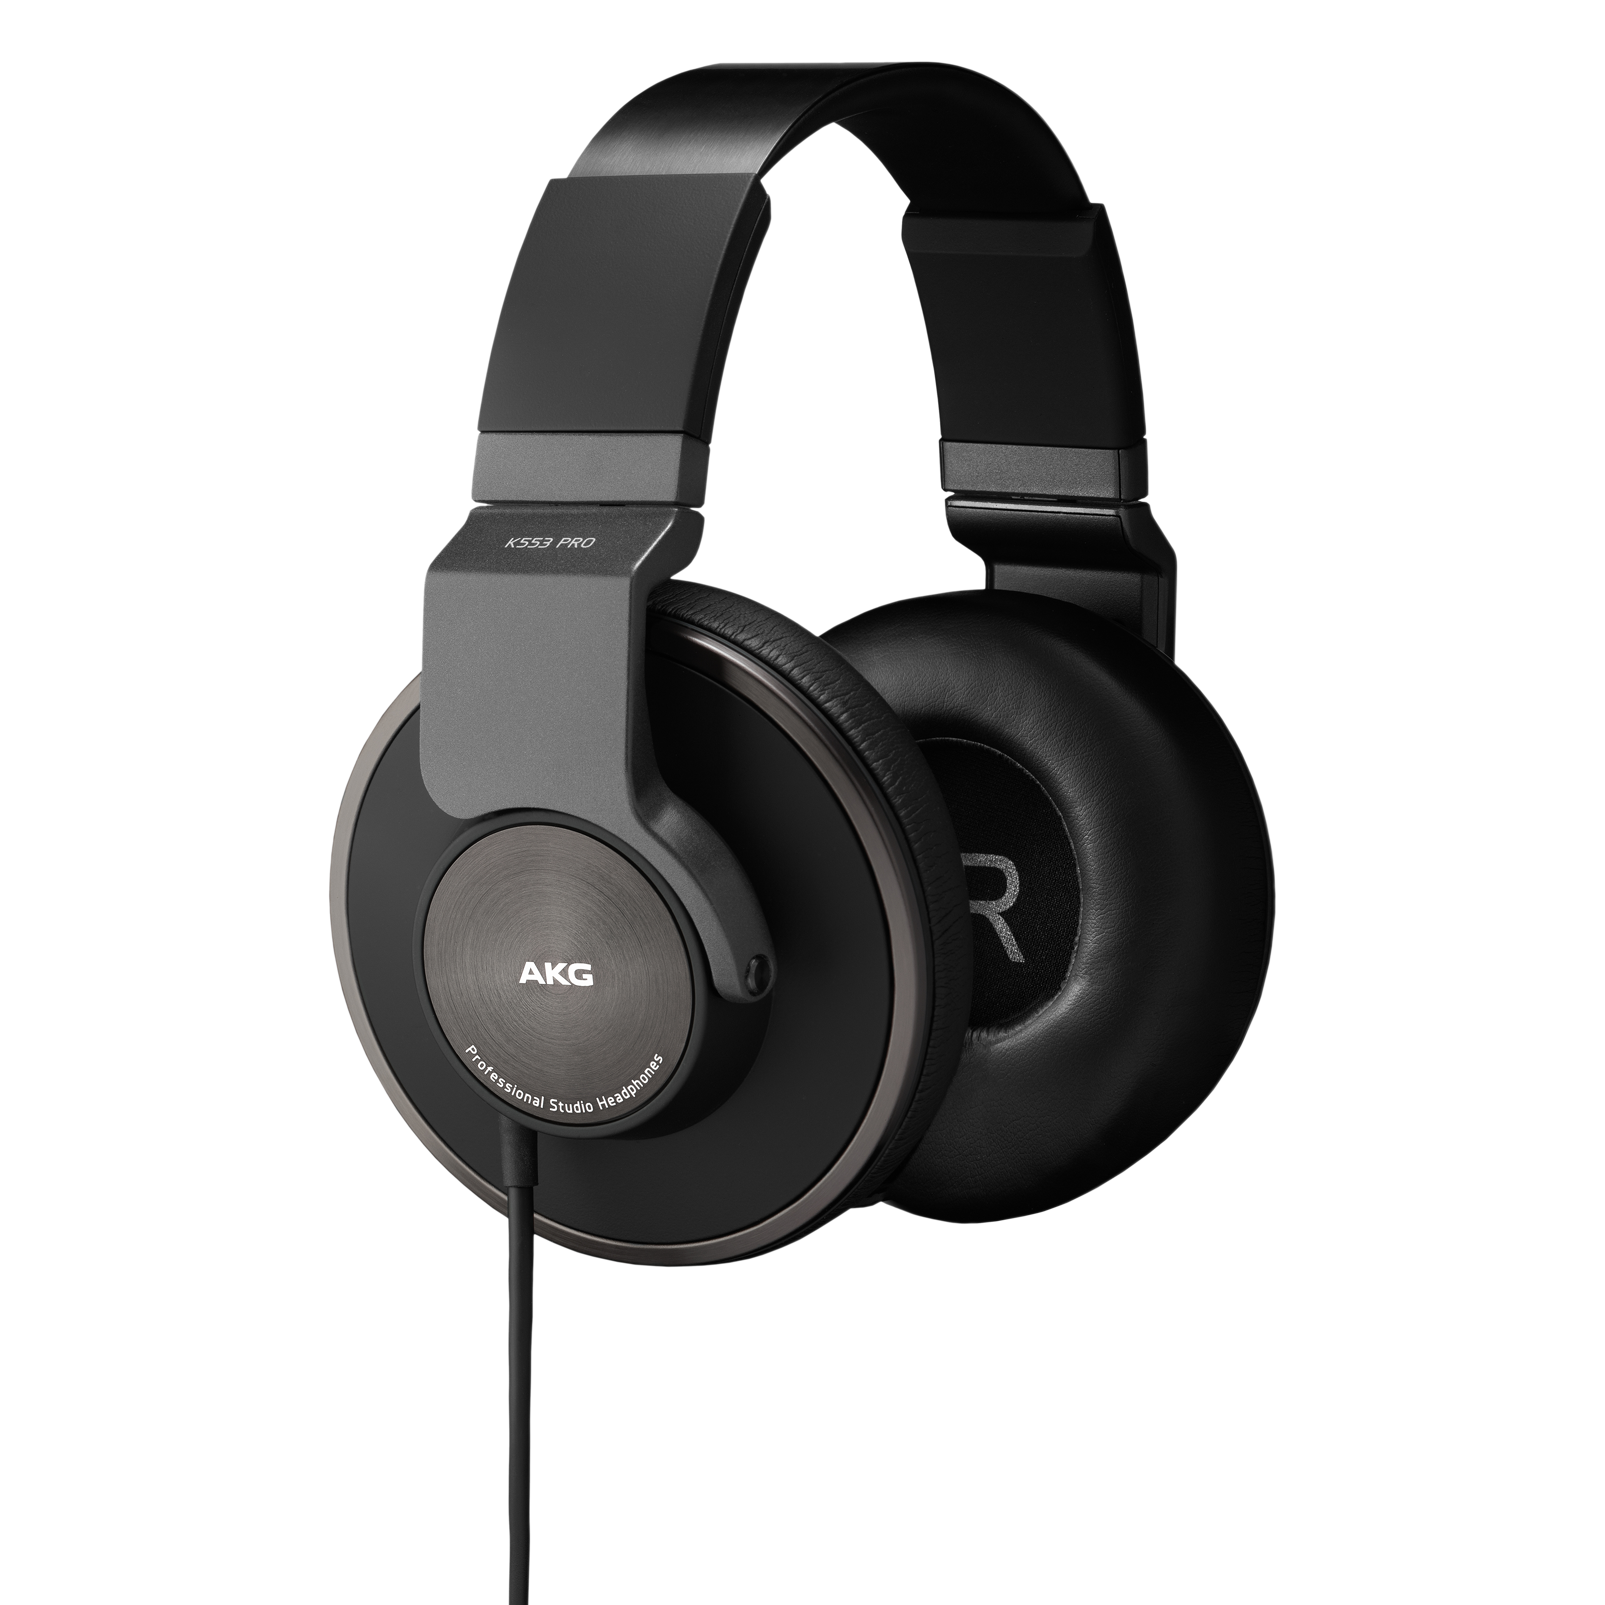 K553 PRO (discontinued) - Black - Closed back studio headphones - Hero